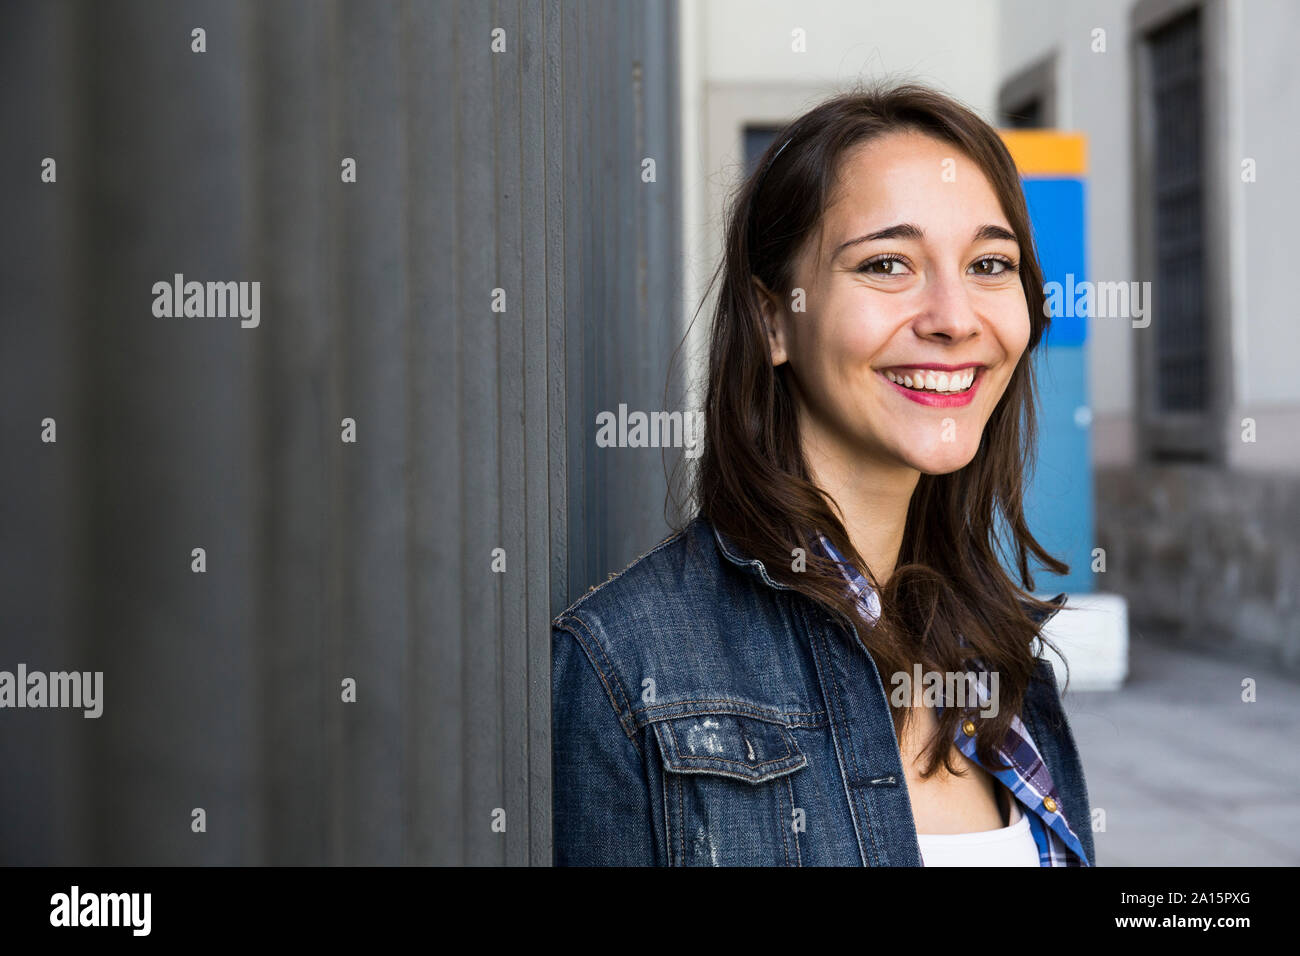 Young smiling woman looking at camera, standing at wall Stock Photo